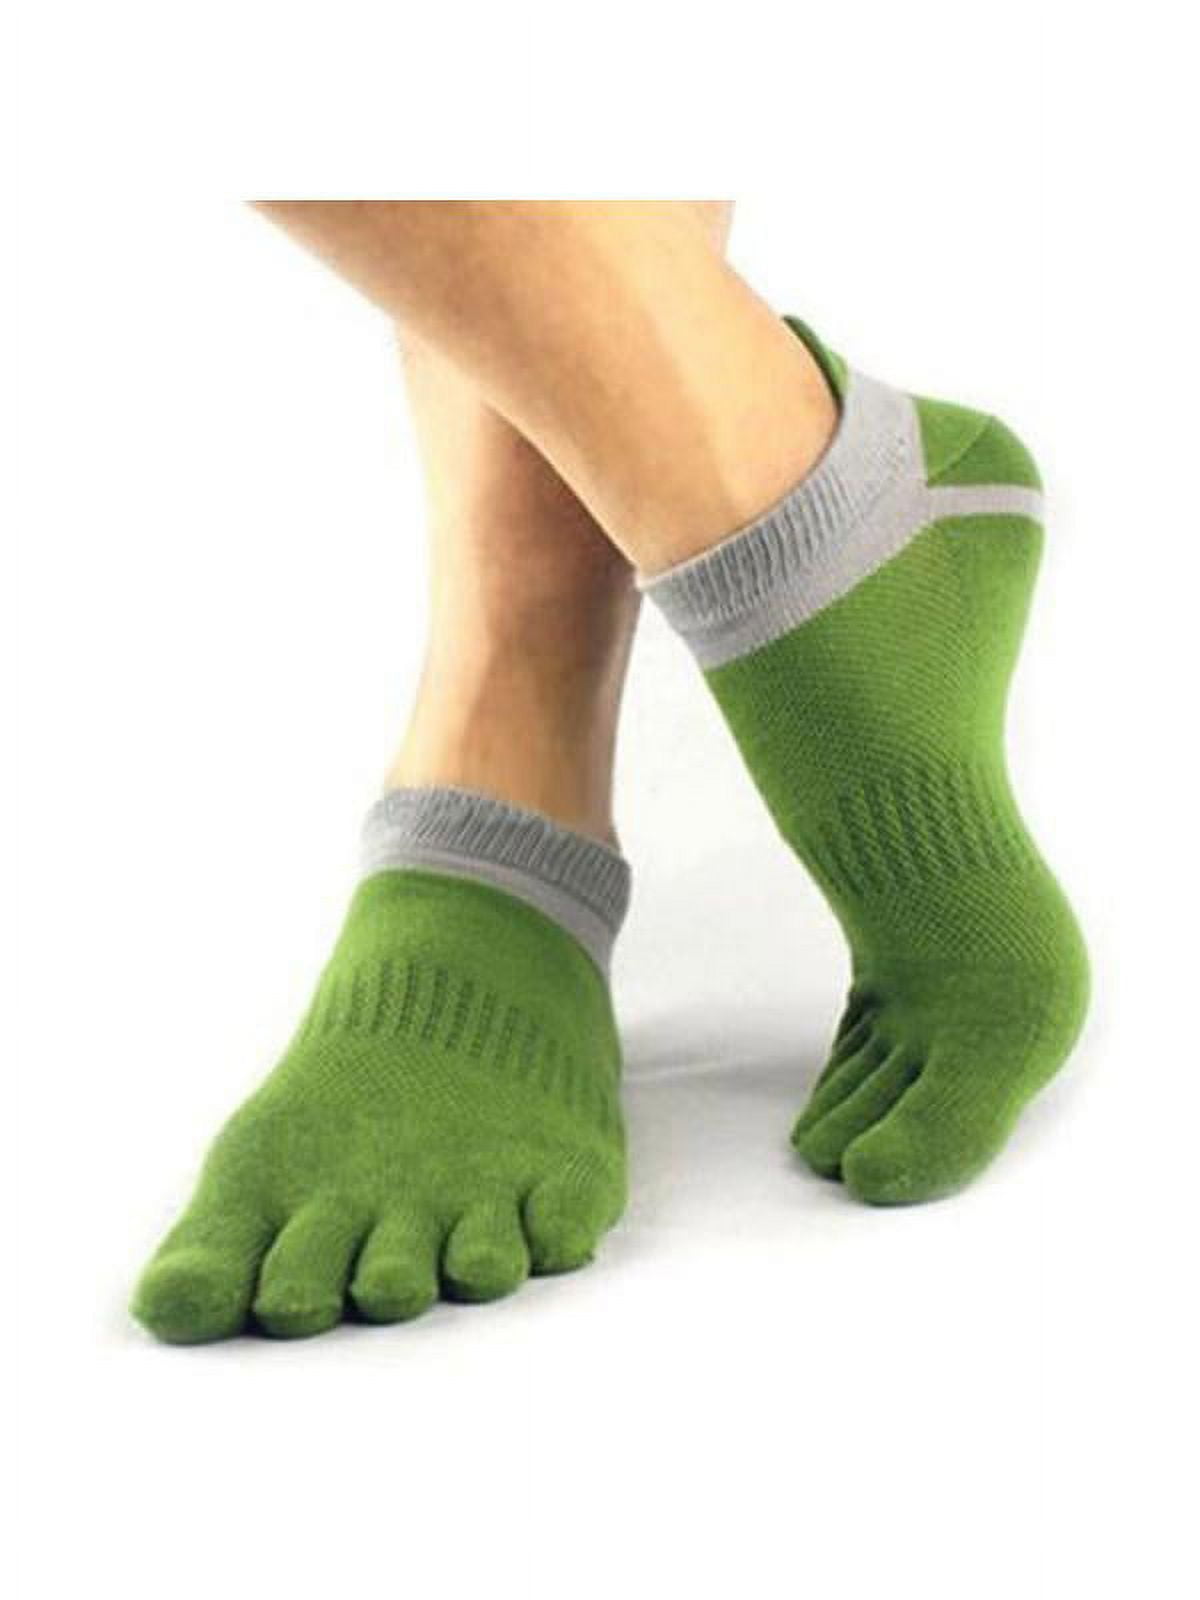 VICOODA Men's Cotton 5 Finger Toe Socks Running No Show Breathable Short  Sport Sock